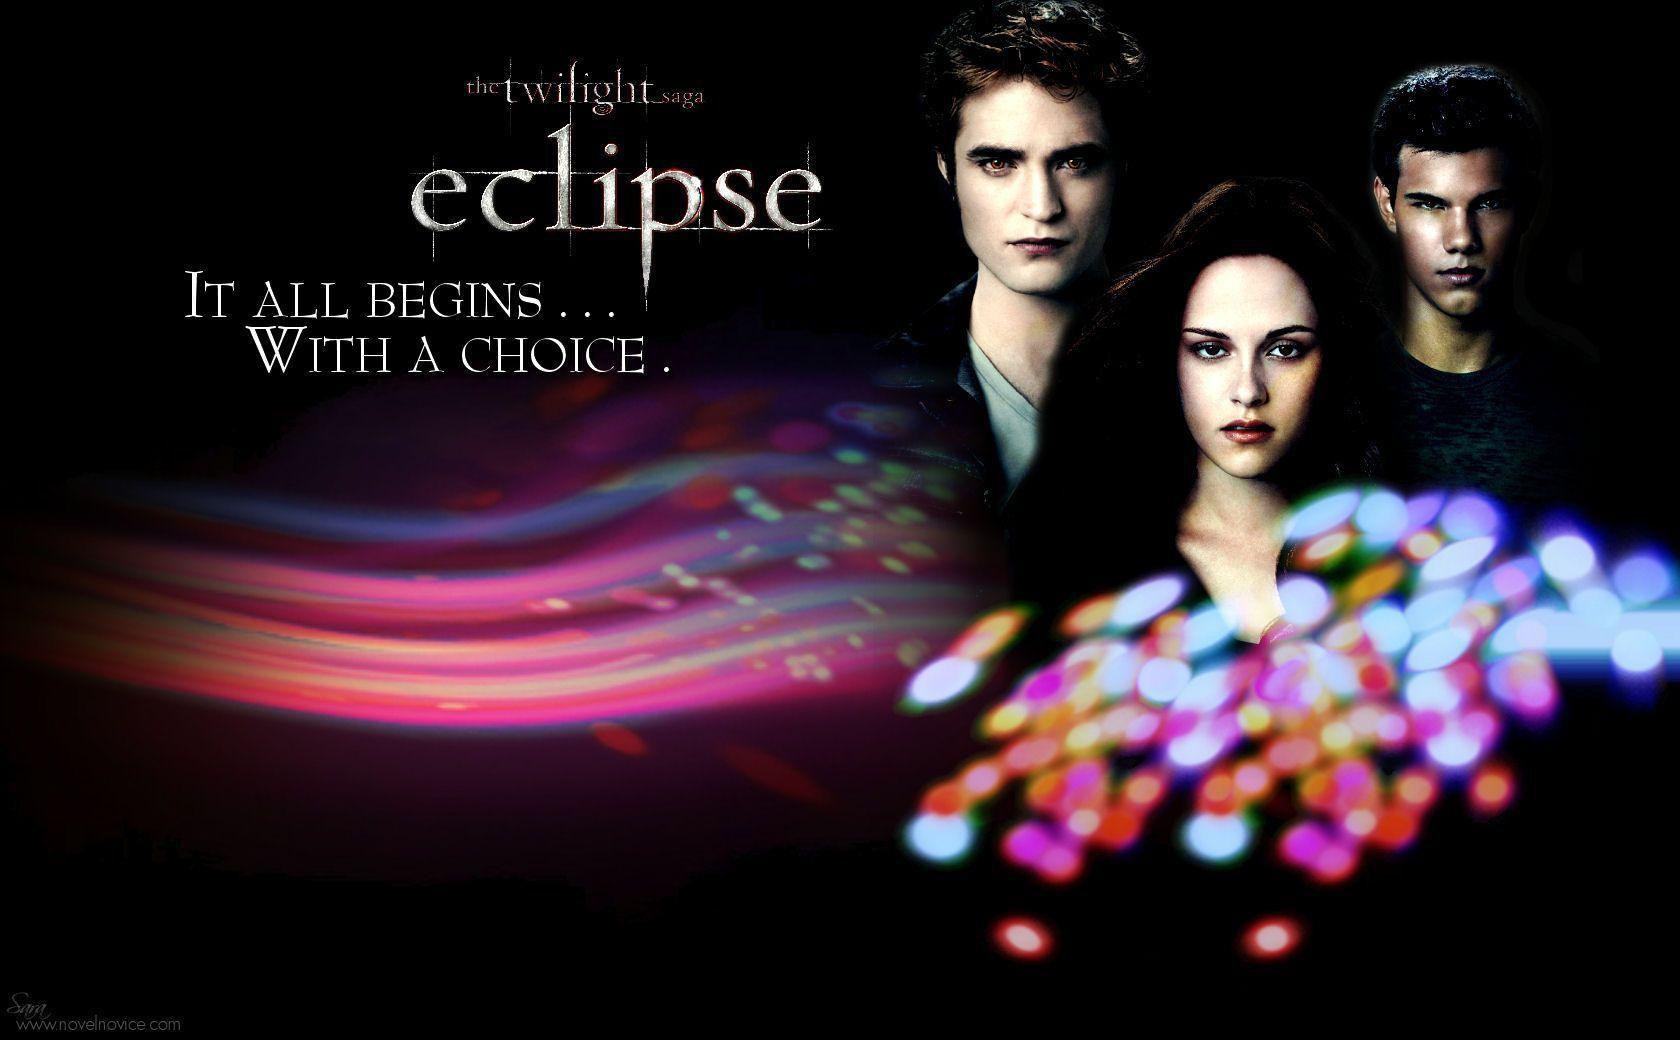 More Desktop Wallpaper for The Twilight Saga: Eclipse